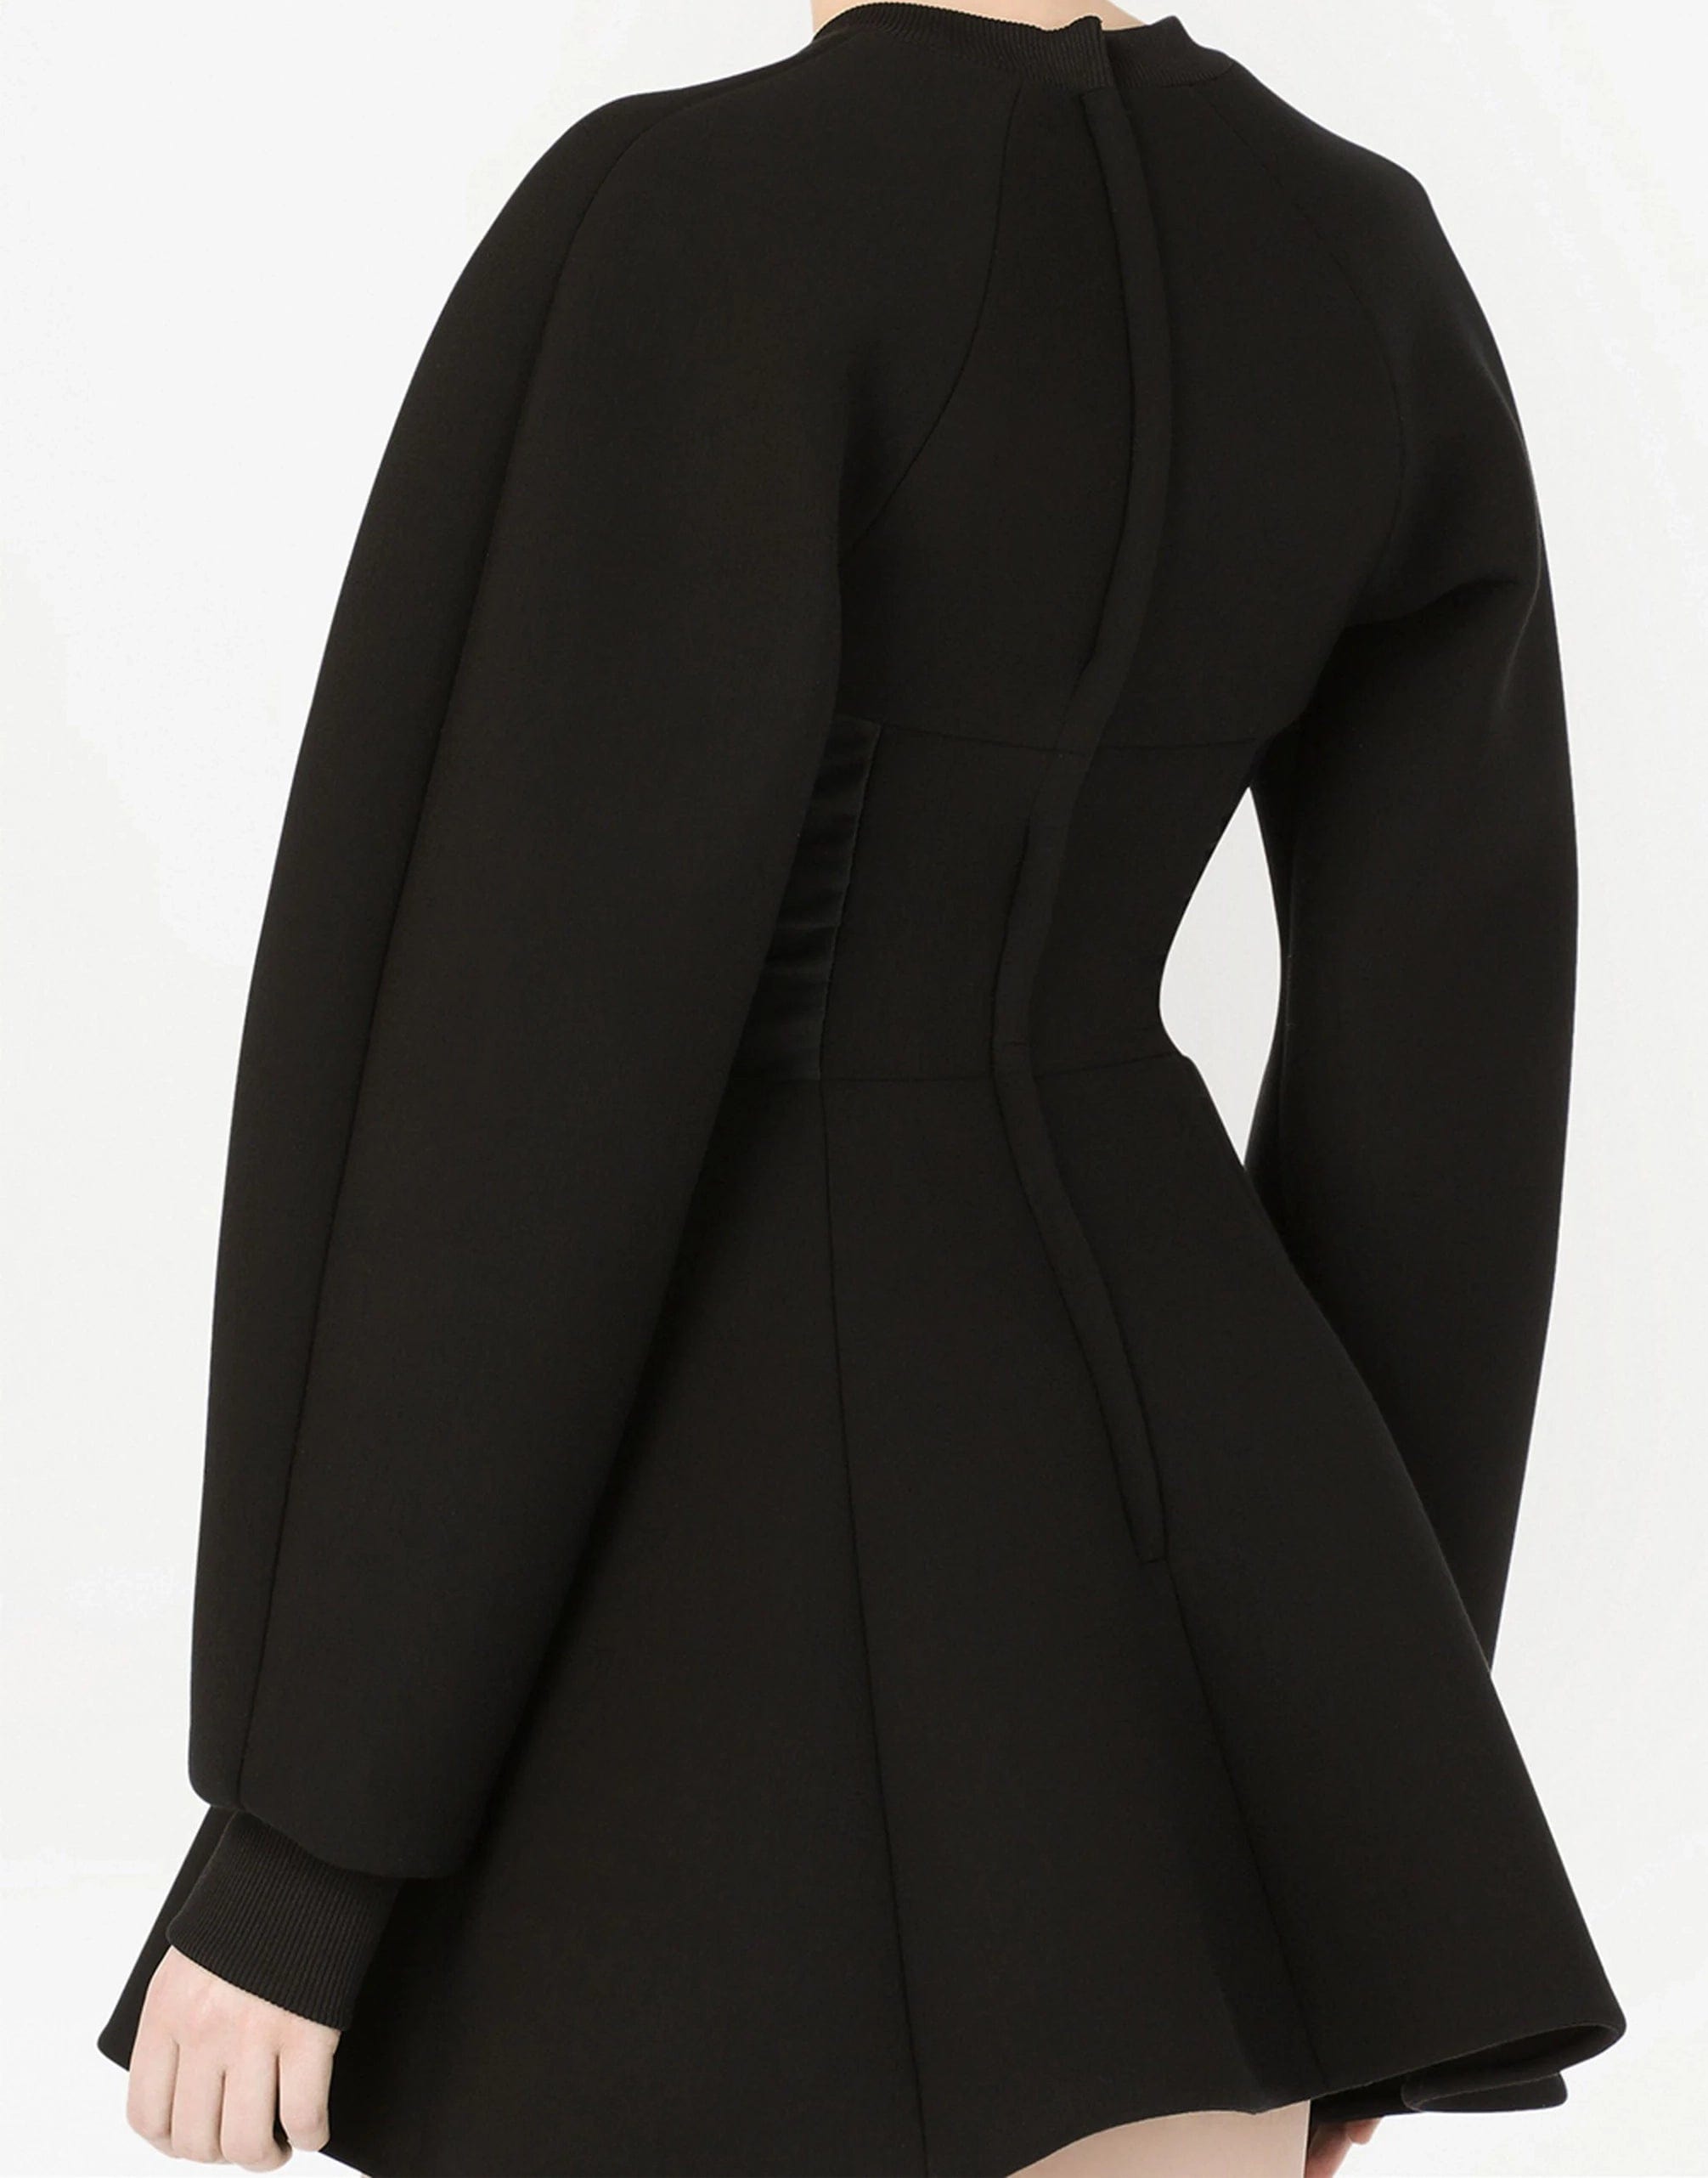 Dolce & Gabbana Technical Jersey Dress With Bustier Details